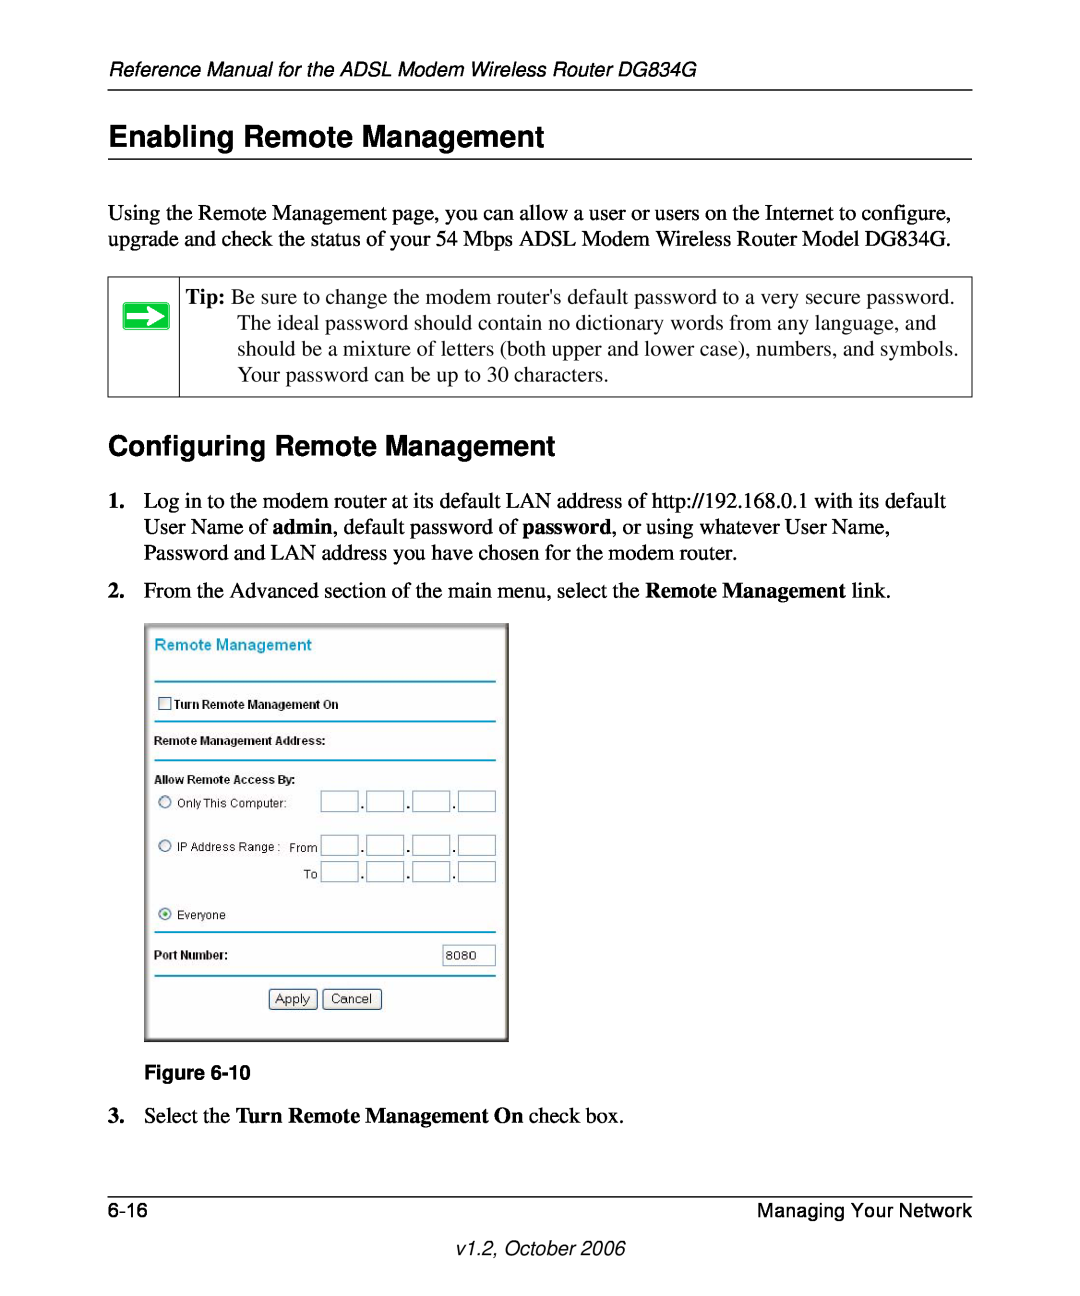 NETGEAR DG834G Enabling Remote Management, Configuring Remote Management, Select the Turn Remote Management On check box 